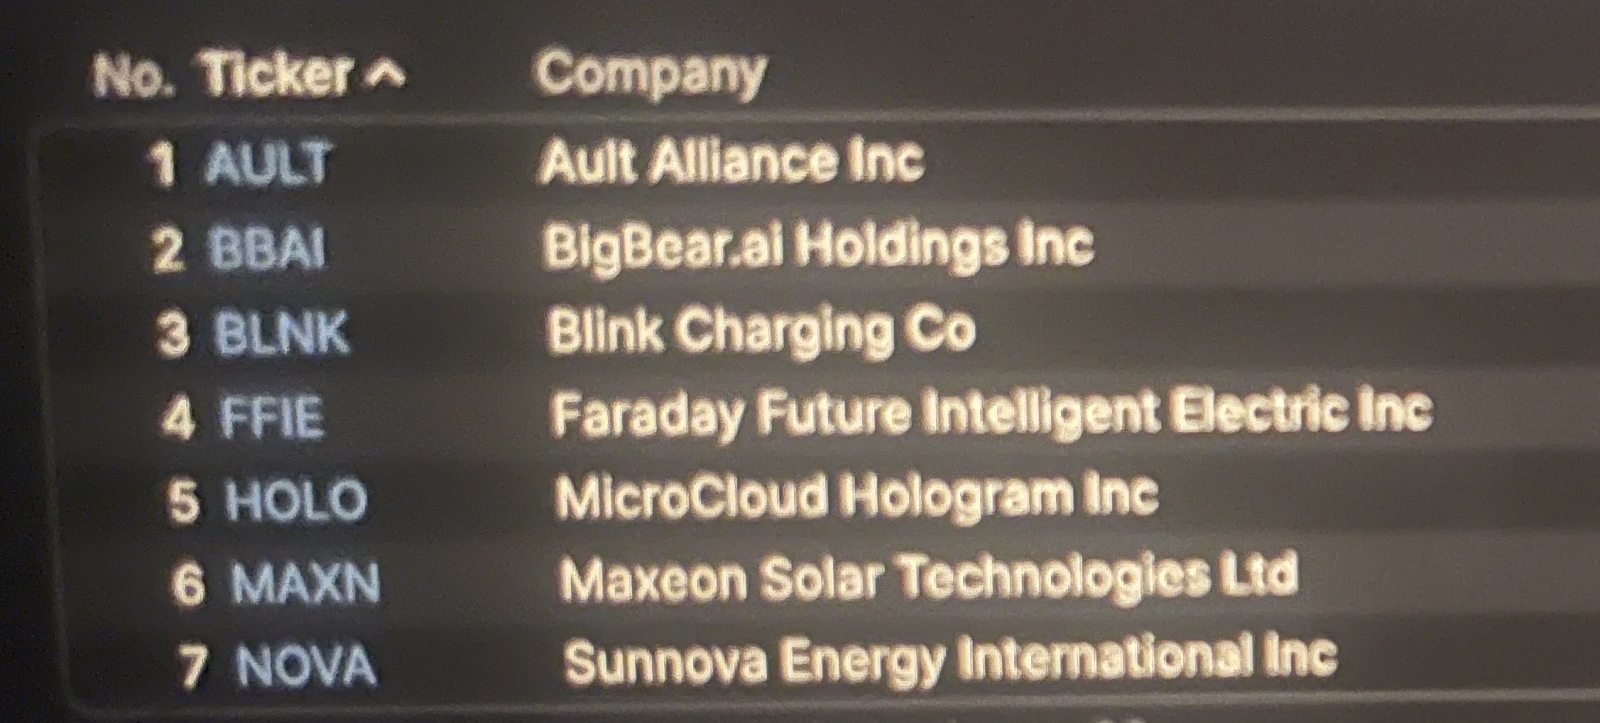 $Ault Alliance (AULT.US)$$BigBear.ai Holdings (BBAI.US)$$Blink Charging (BLNK.US)$$Faraday Future Intelligent Electric Inc. (FFIE.US)$$MicroCloud Hologram (HOLO...